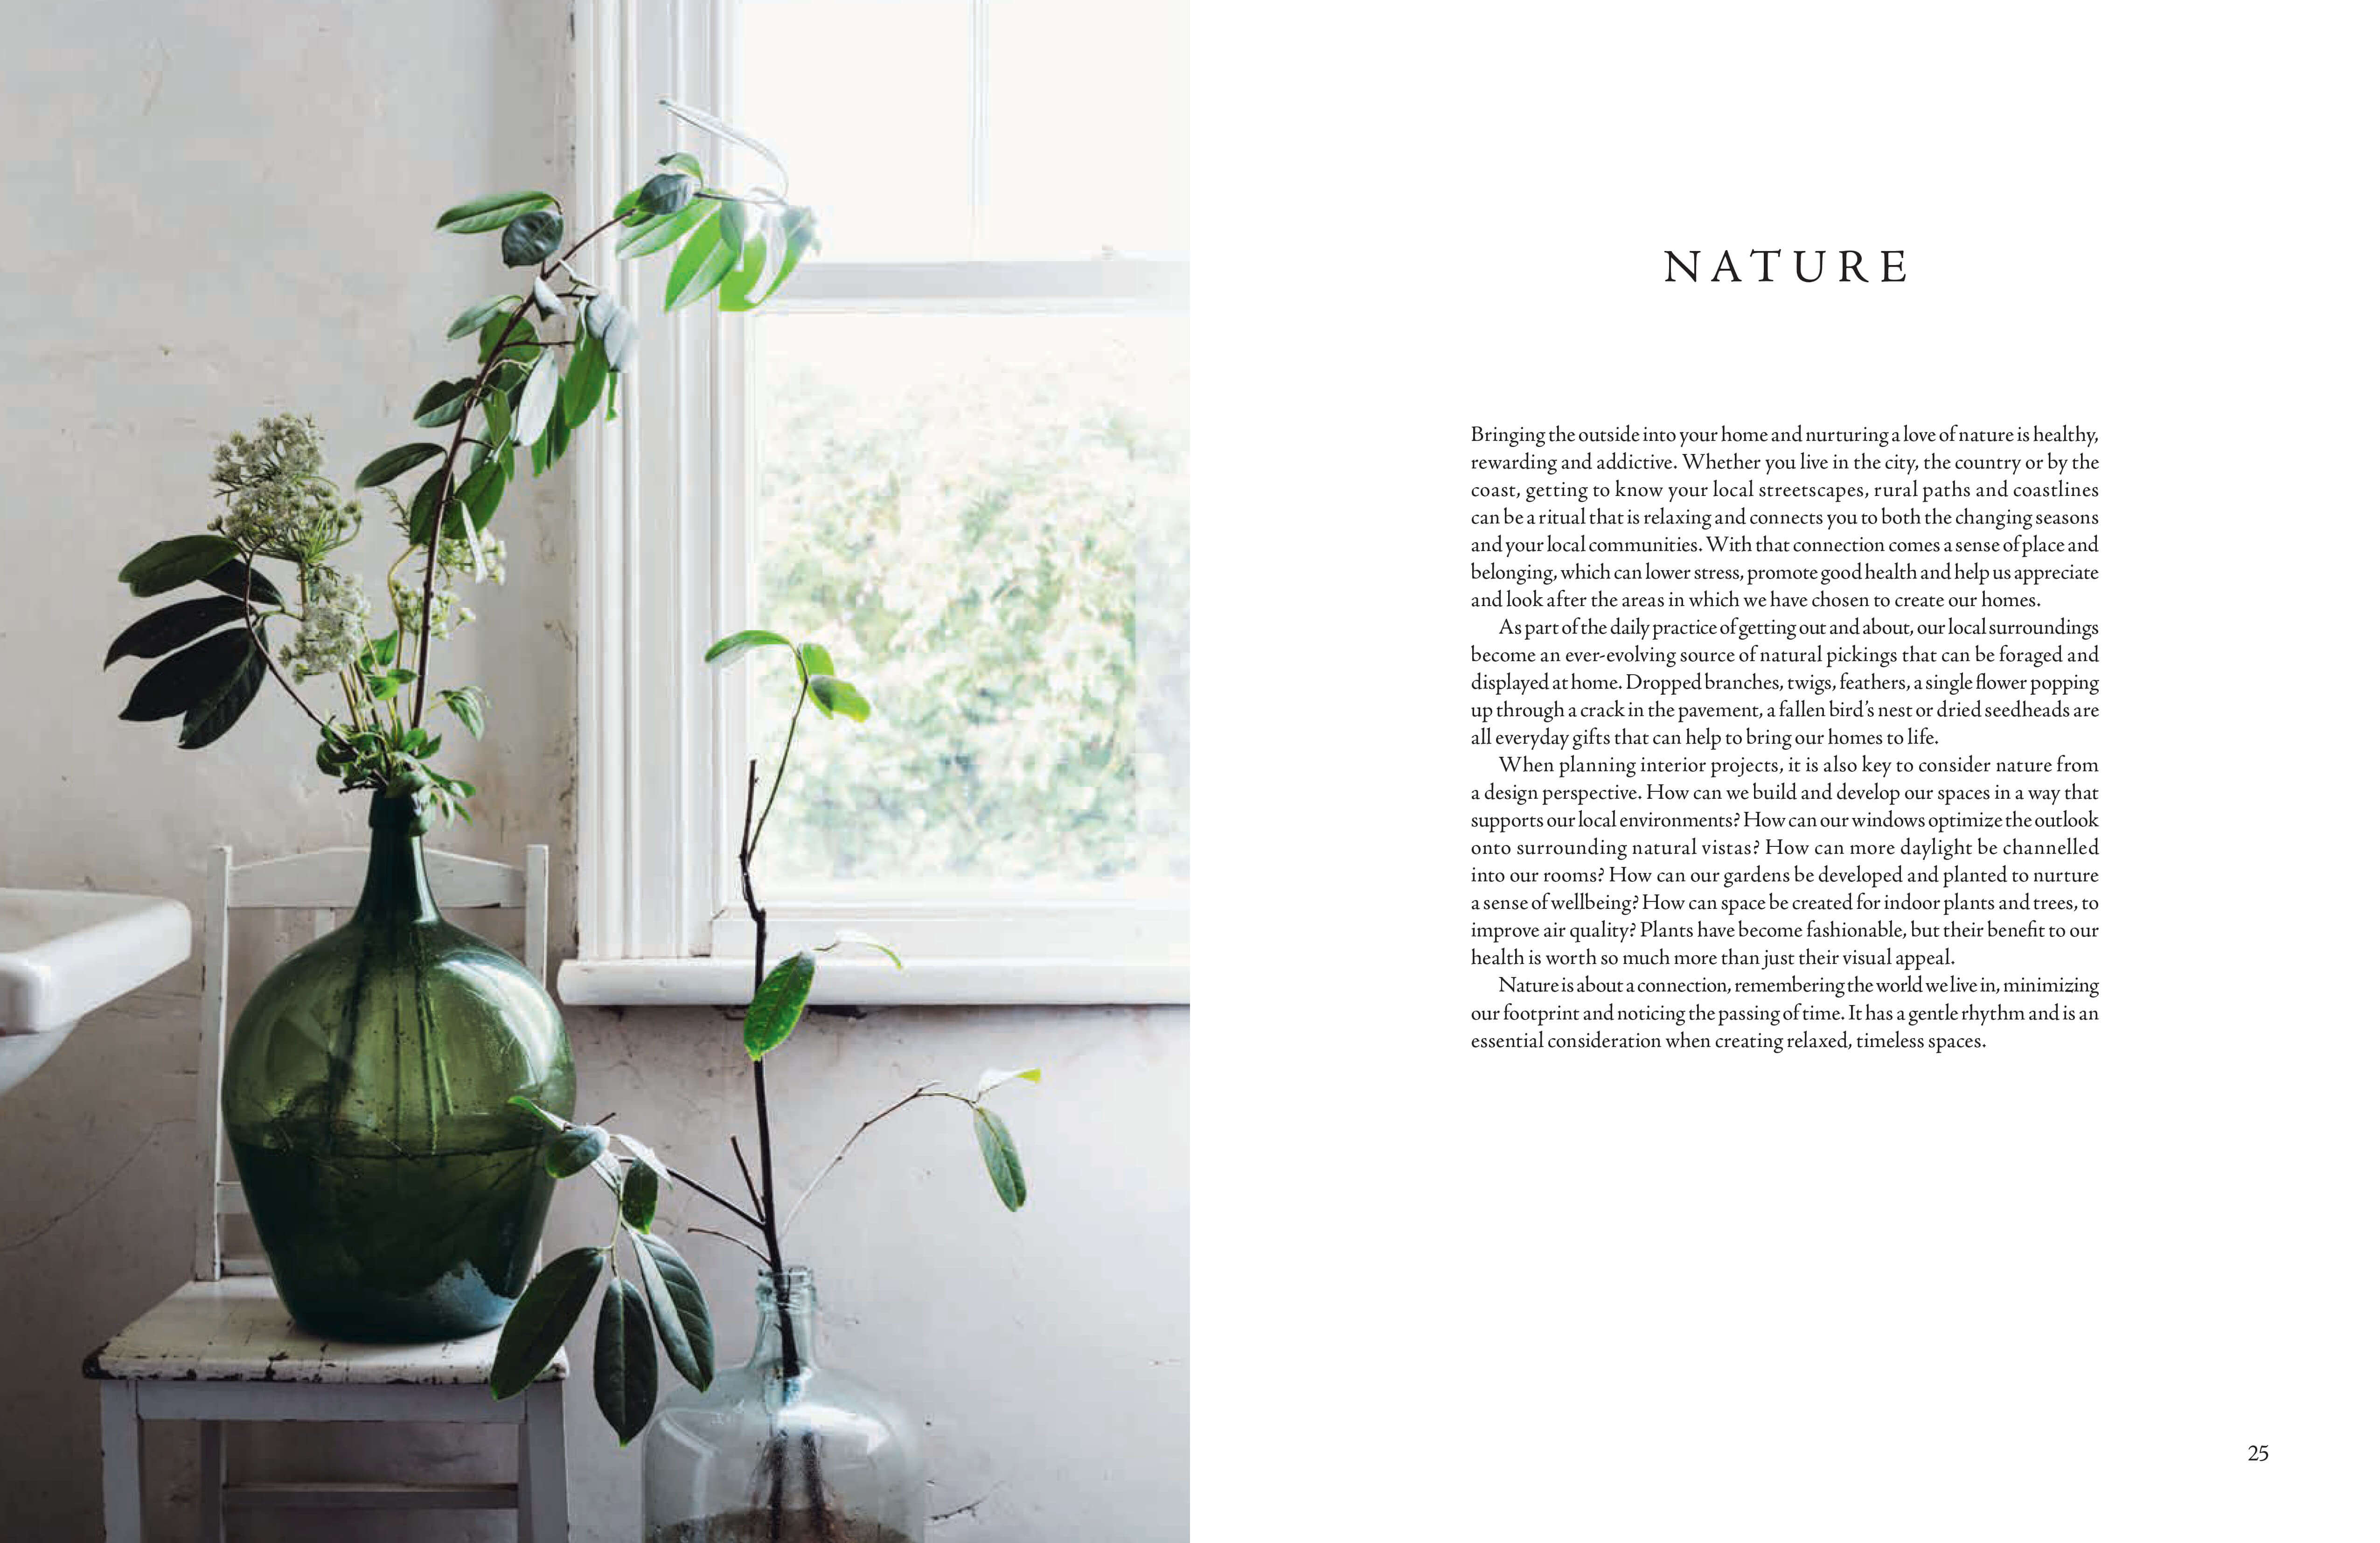 Curate: Inspiration For An Individual Home | Book | by Lynda Gardener & Ali Heath - Lifestory - Bookspeed